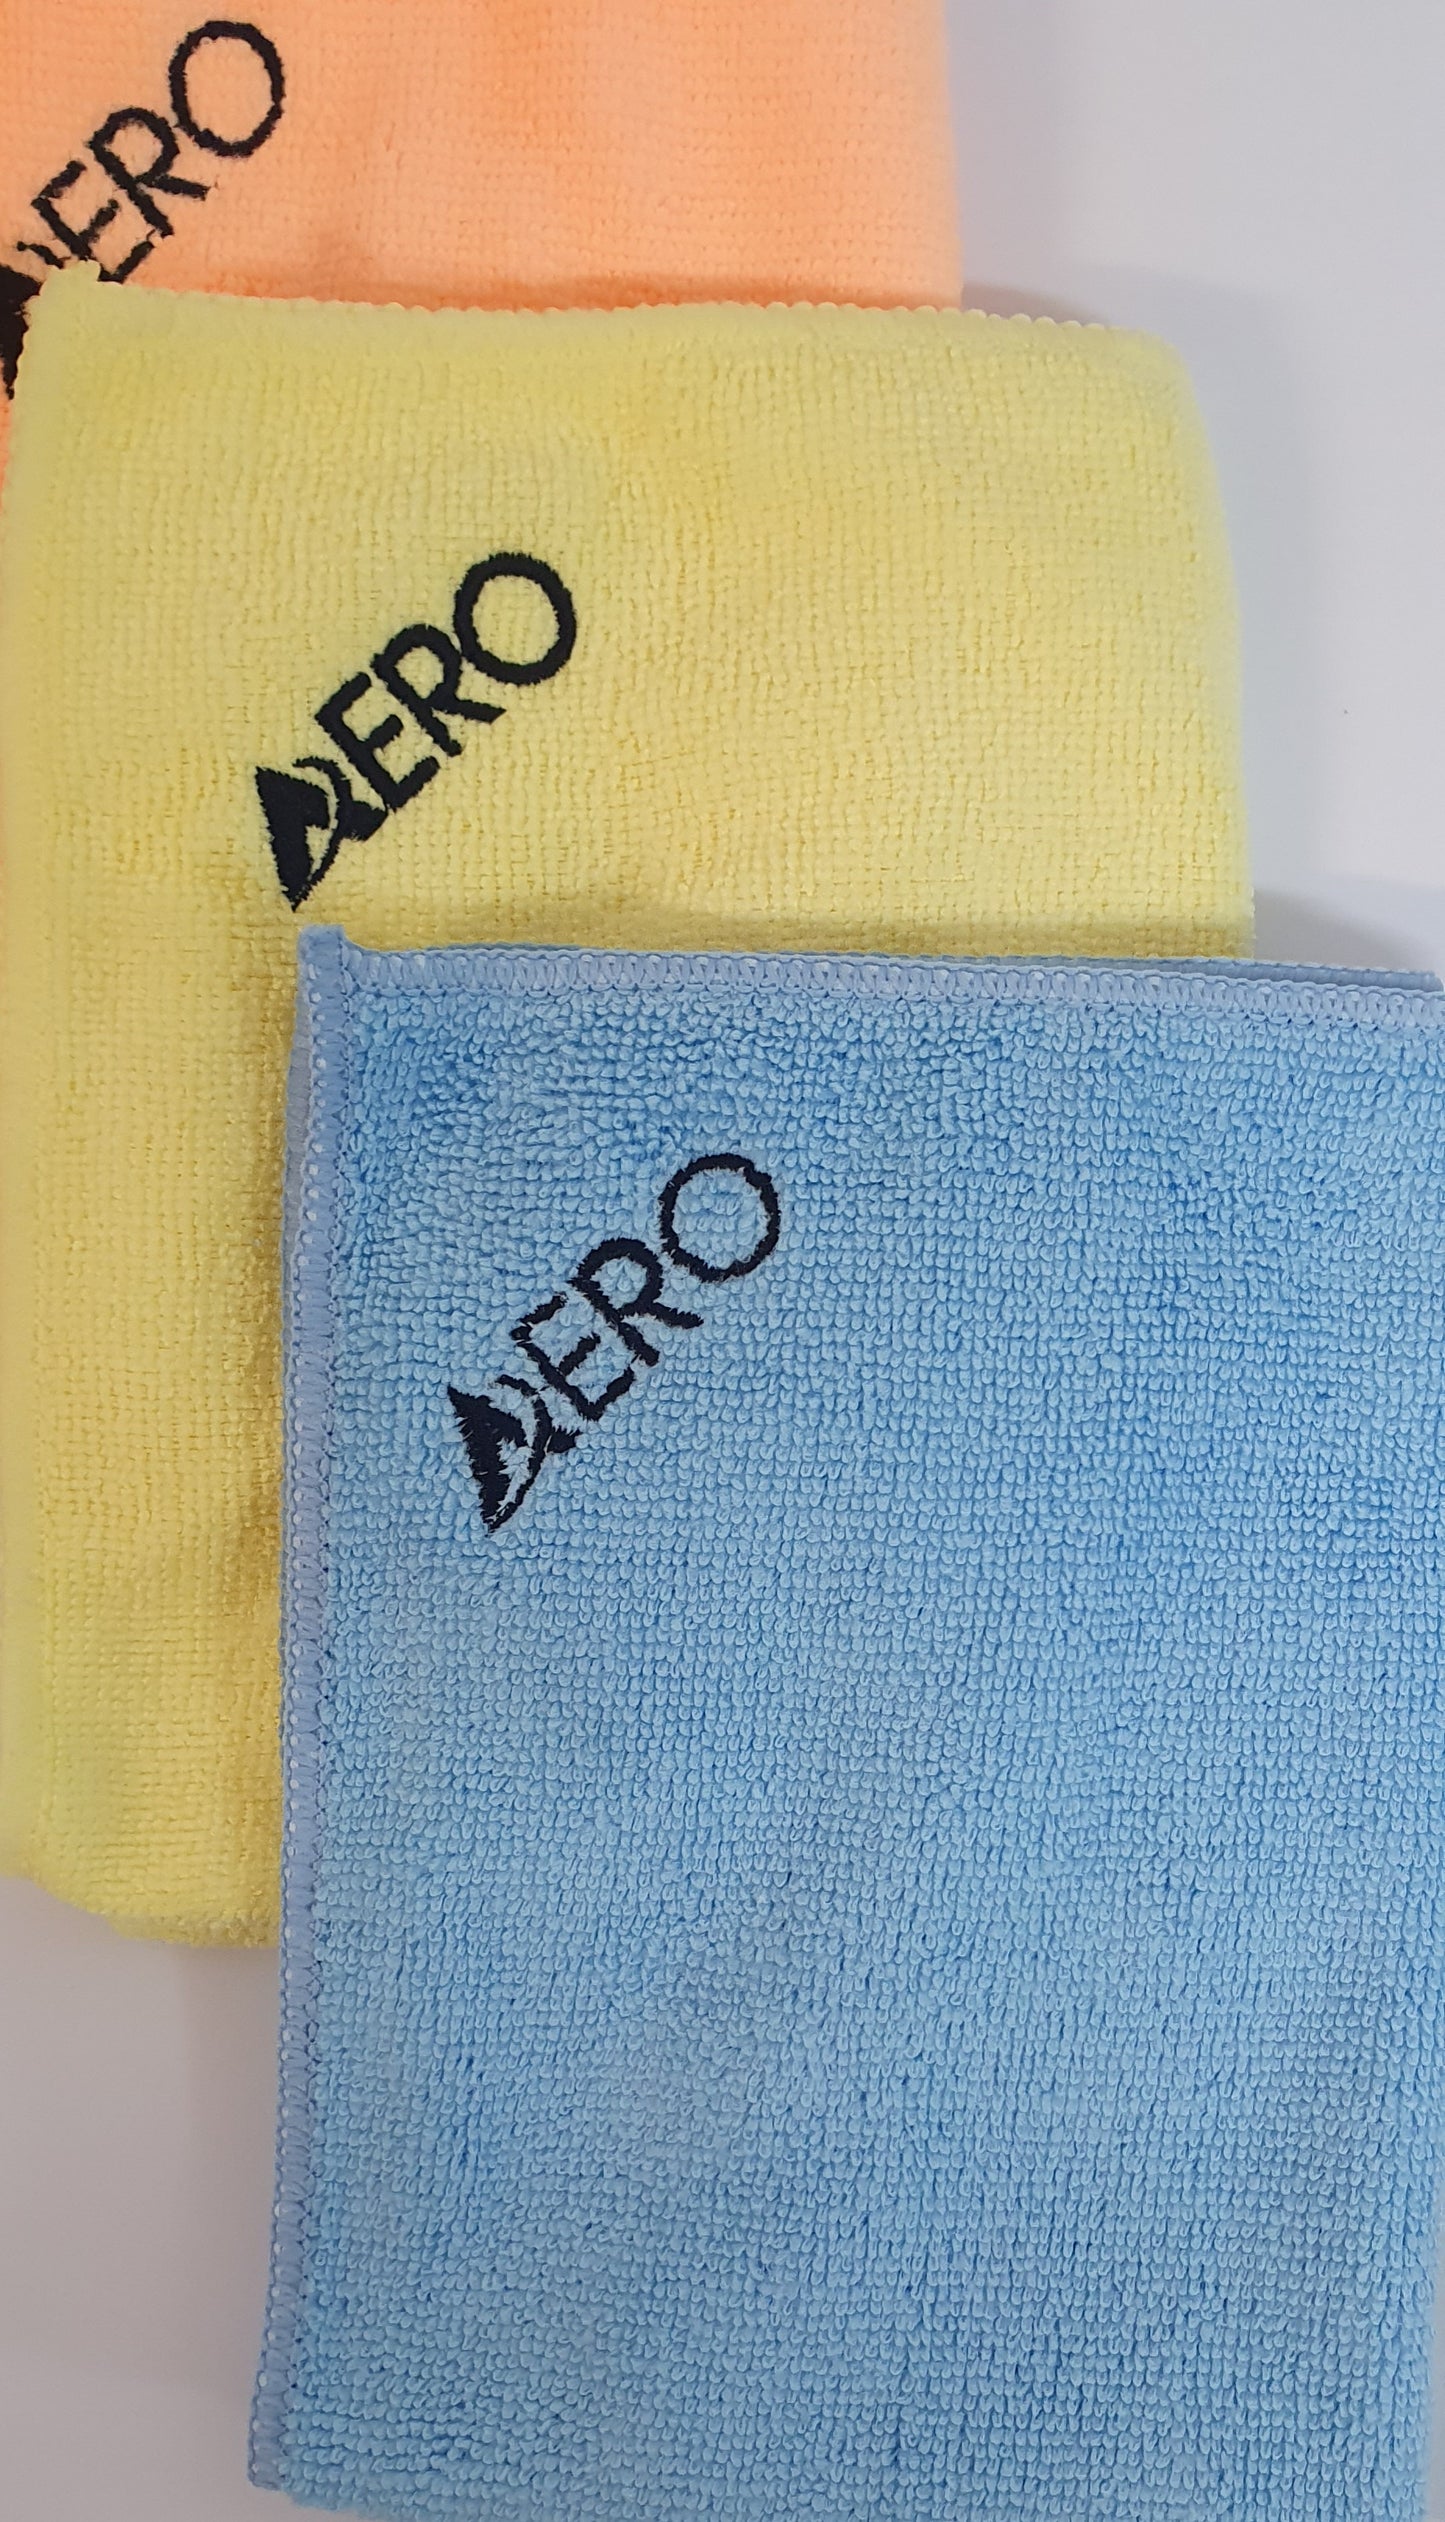 Aero Bowlsdri Cloth